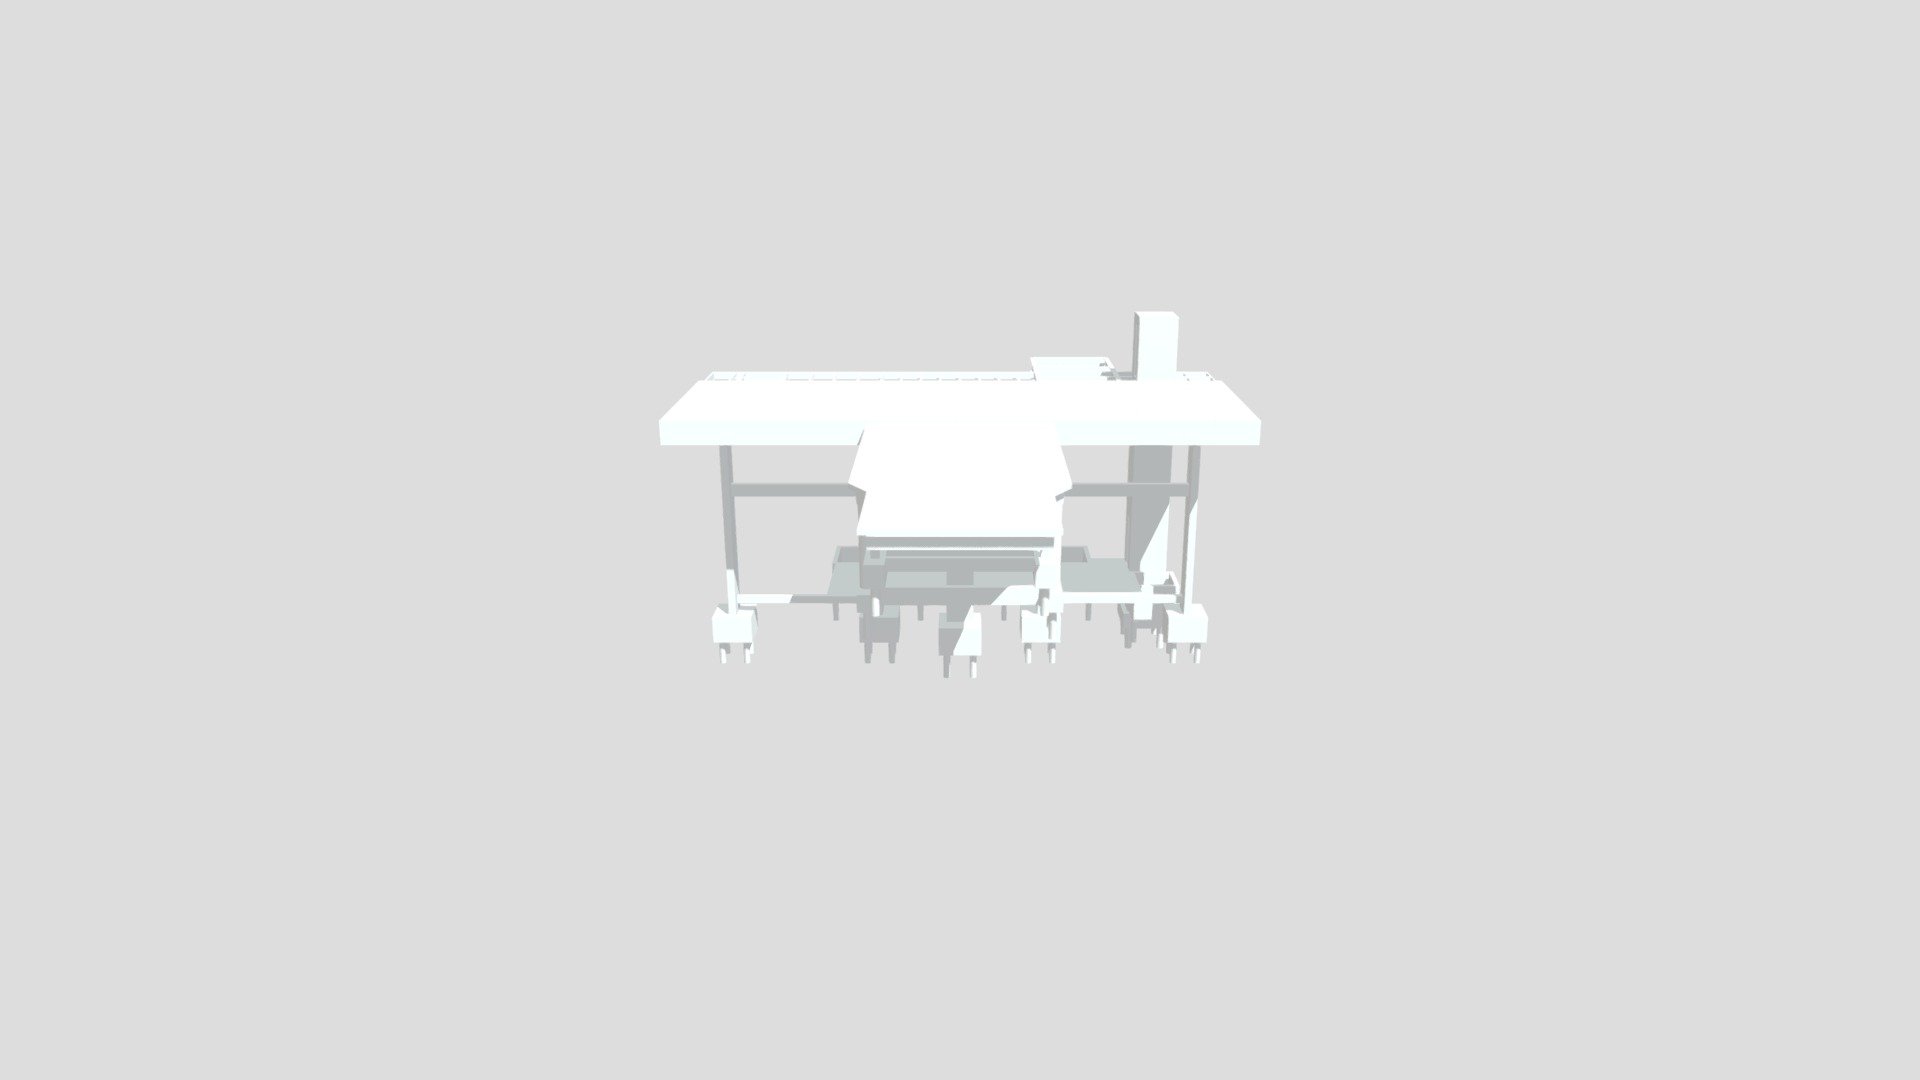 2127-FORMA-COMPLETA - 3D model by NLD_Engenharia [192c0c0] - Sketchfab